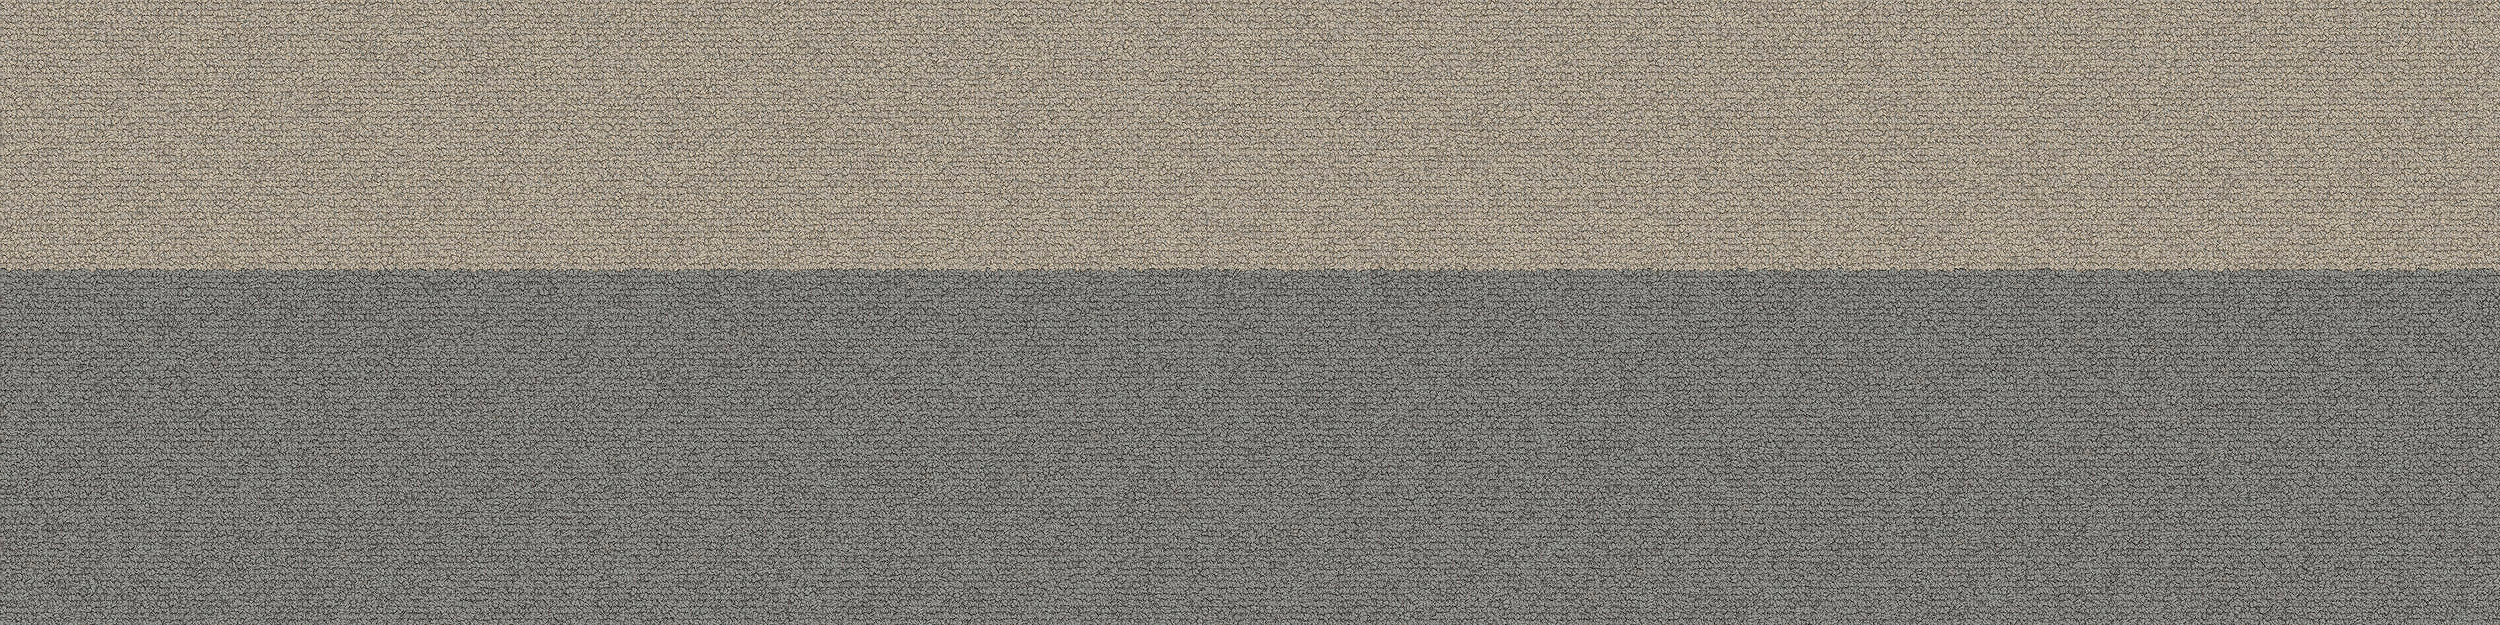 PH210 Carpet Tile In Pigeon Bands image number 9